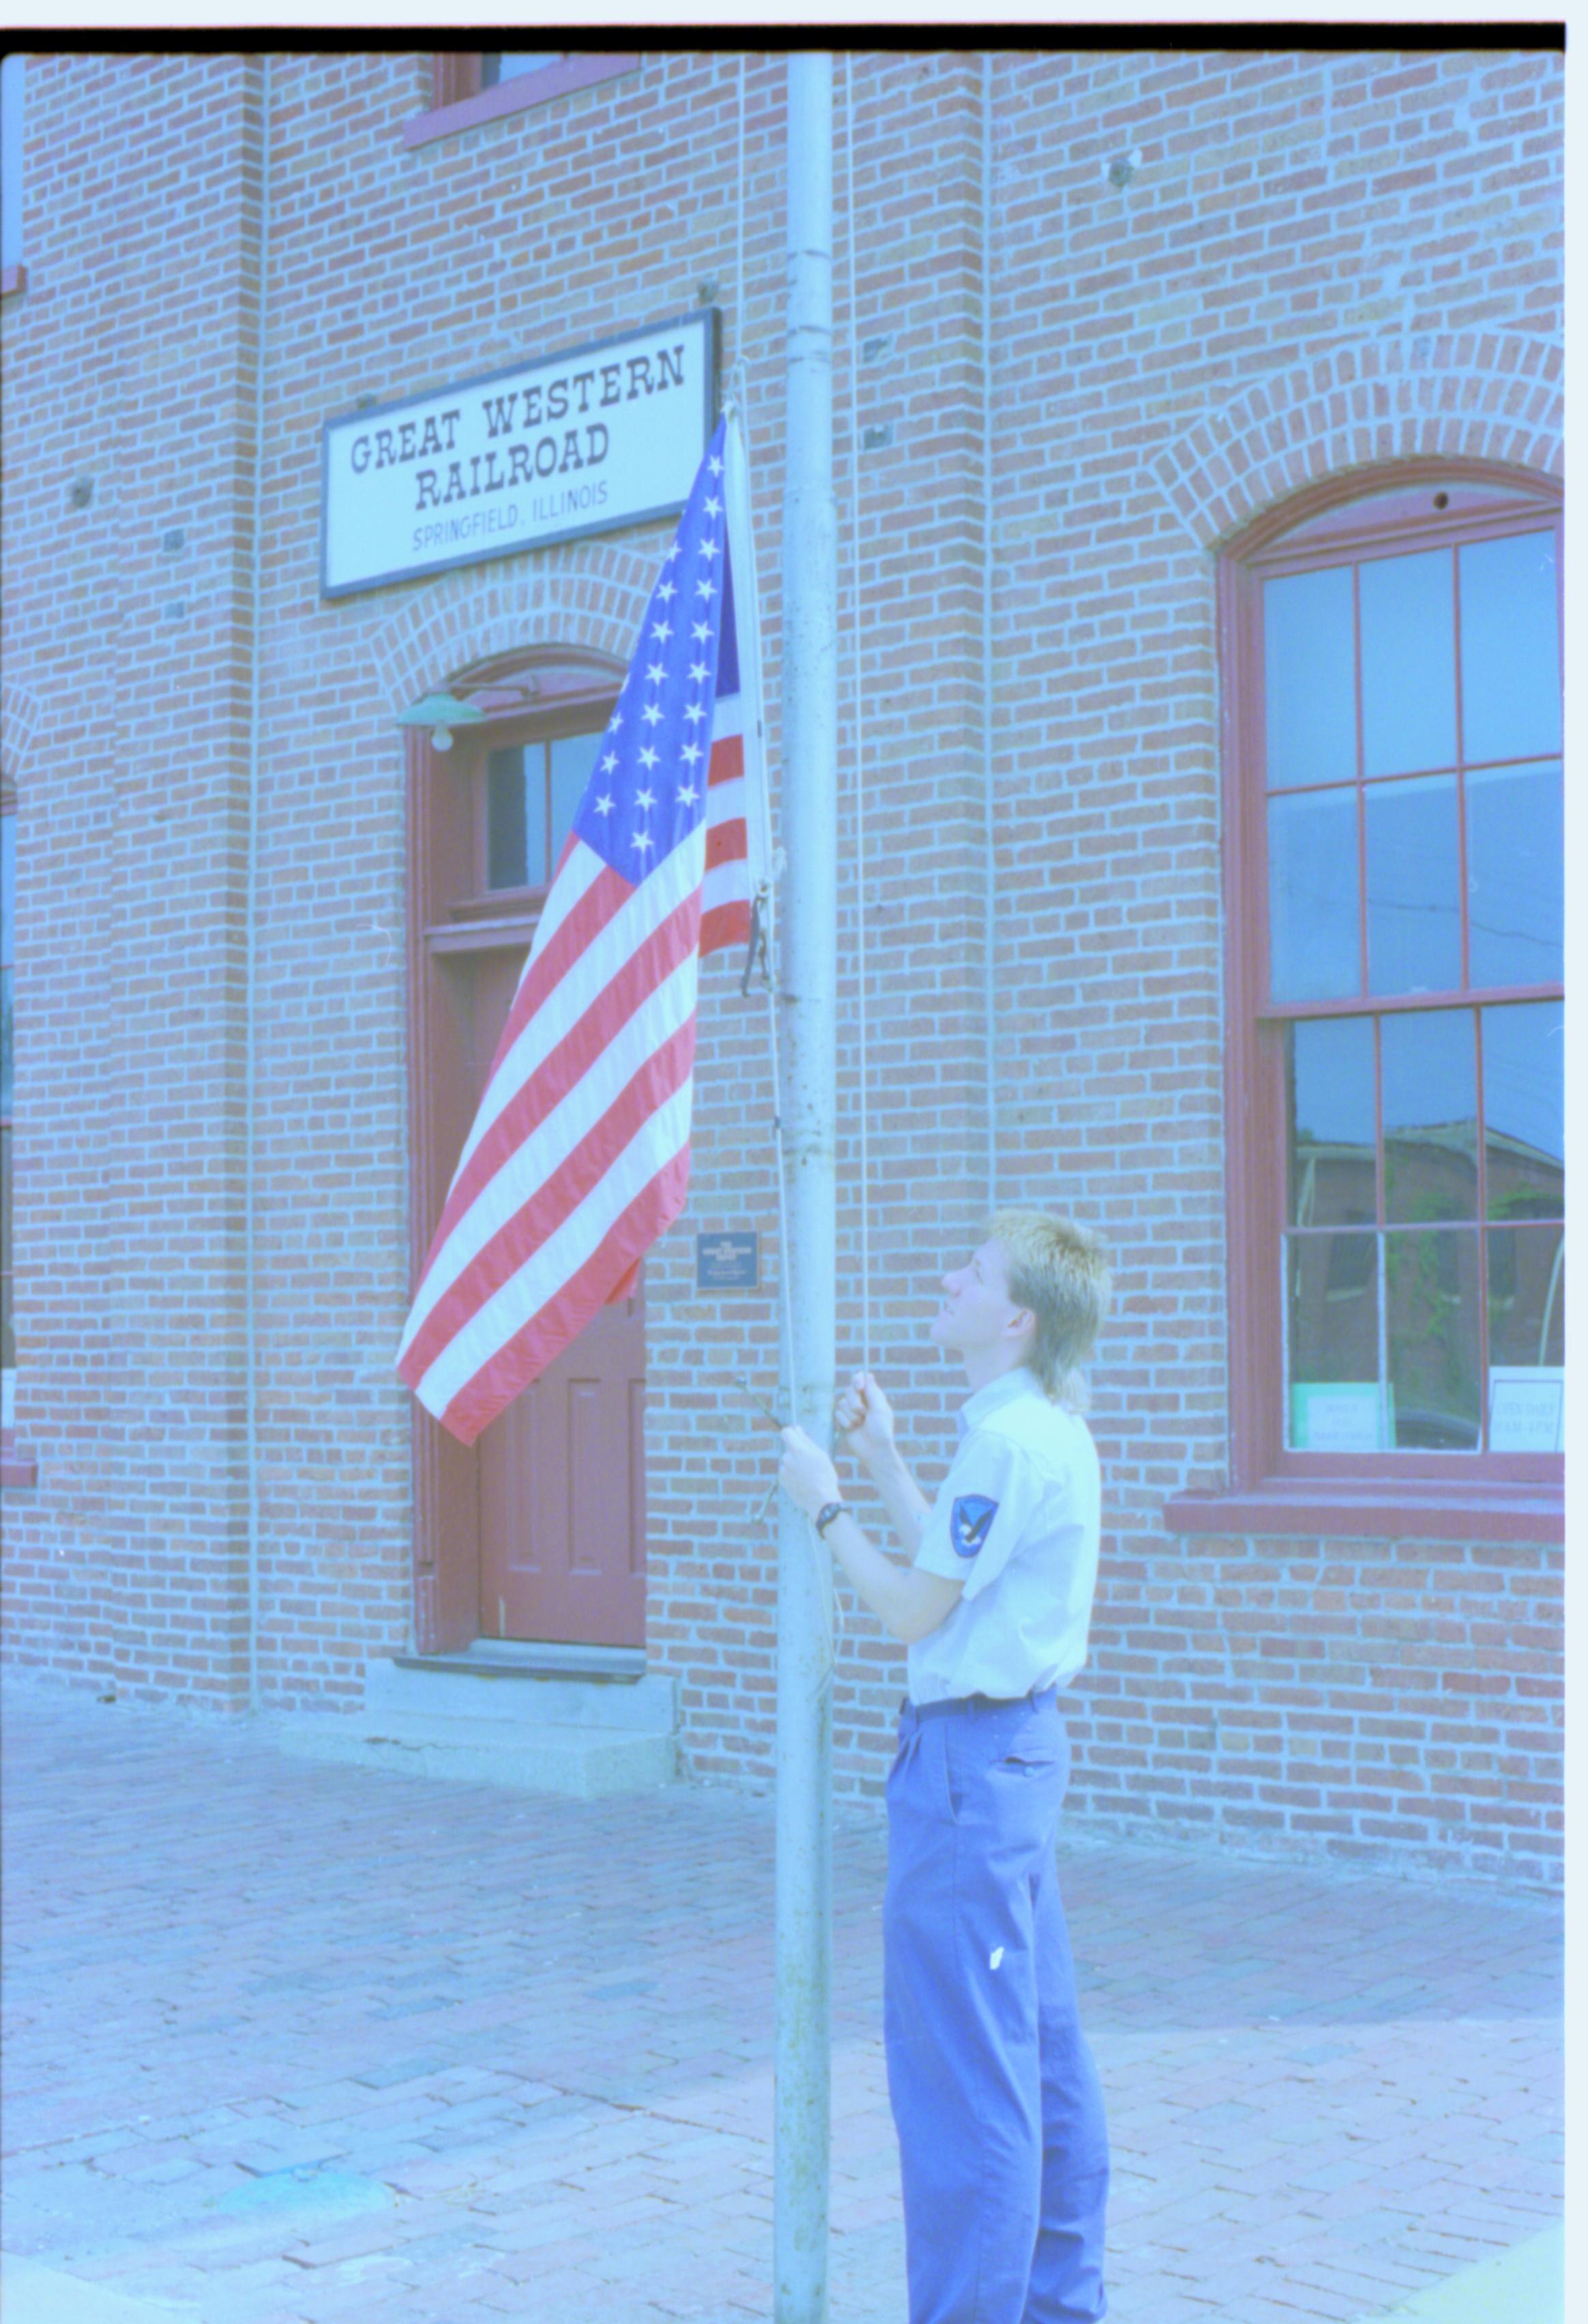 Man raising flag. Great Western Train Depot, Train Station